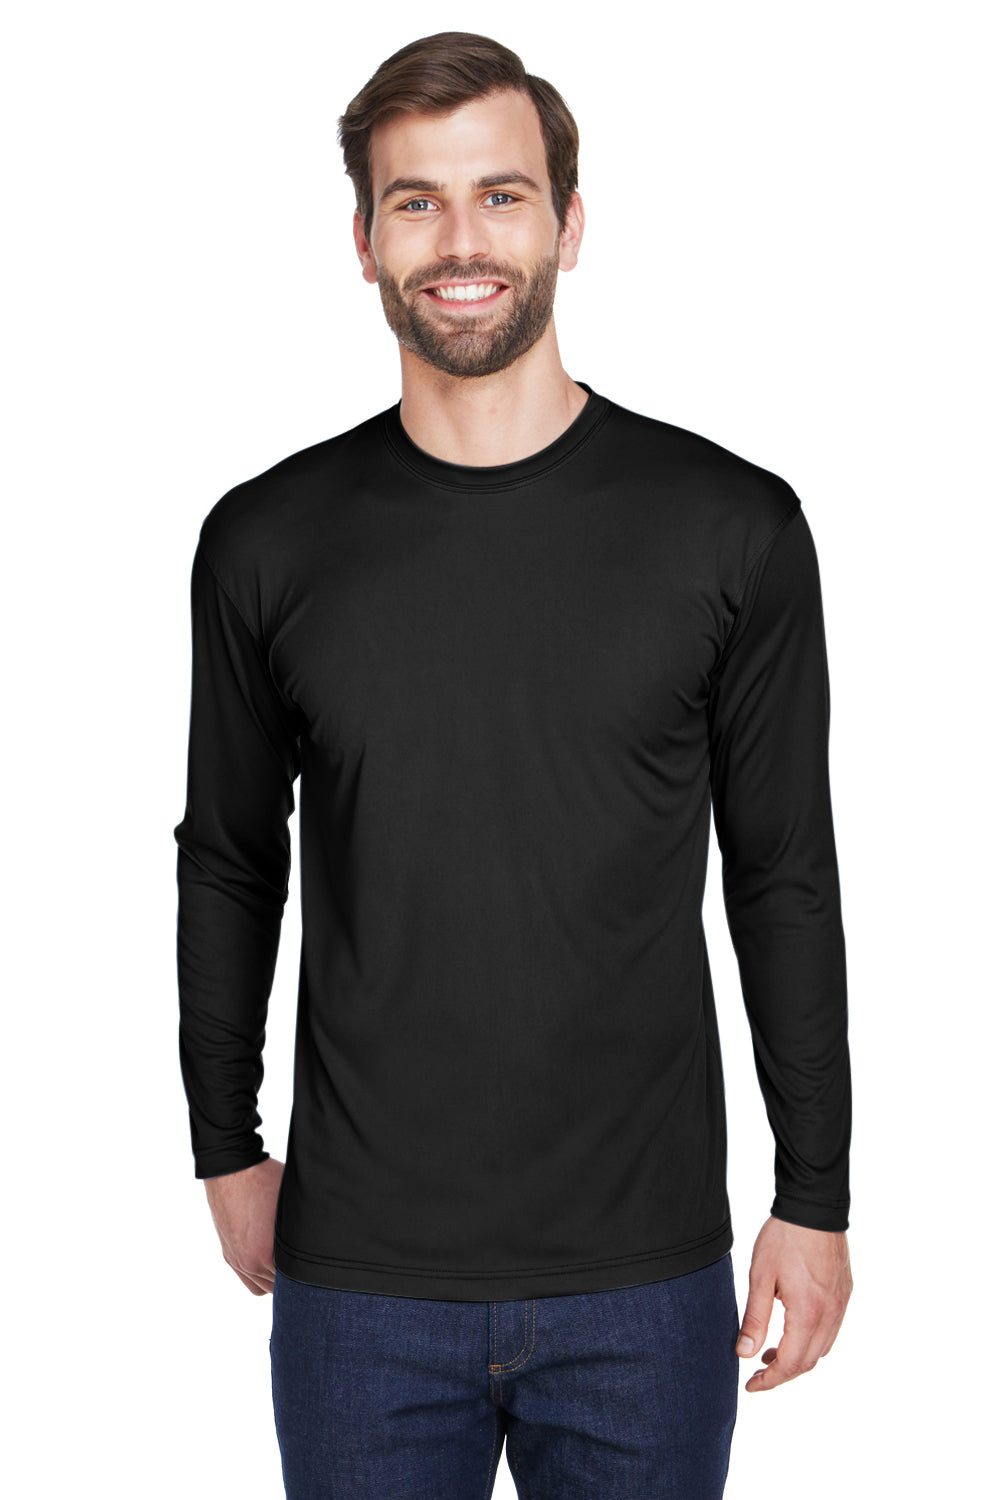 UltraClub 8422 Mens Cool & Dry Performance Moisture Wicking Long Sleeve Crewneck T-Shirt Black Front